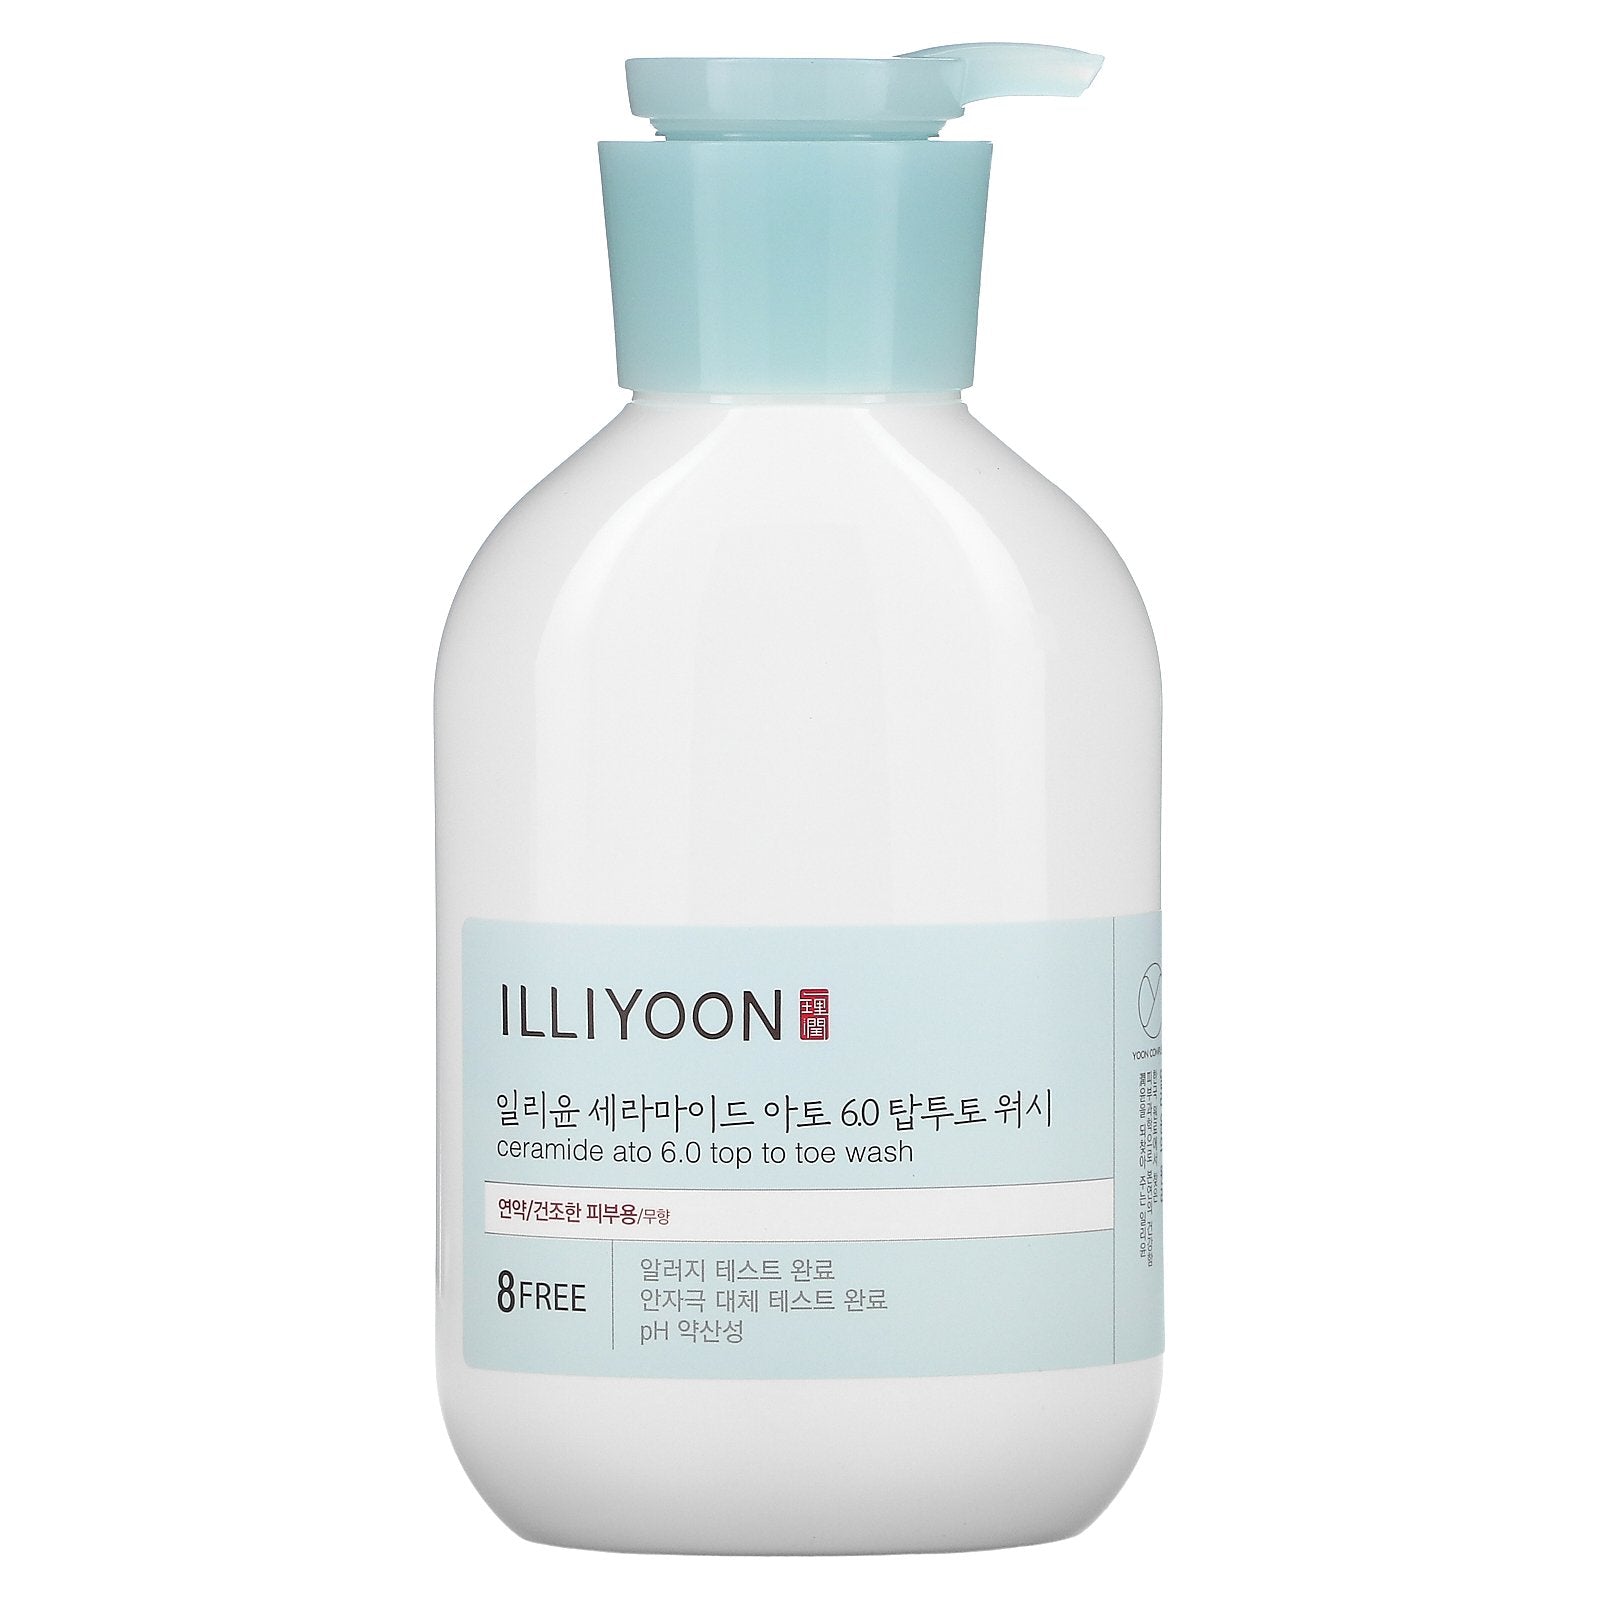 Illiyoon Ceramide Ato 6.0 Top to Toe Wash Skin Care ILLIYOON   